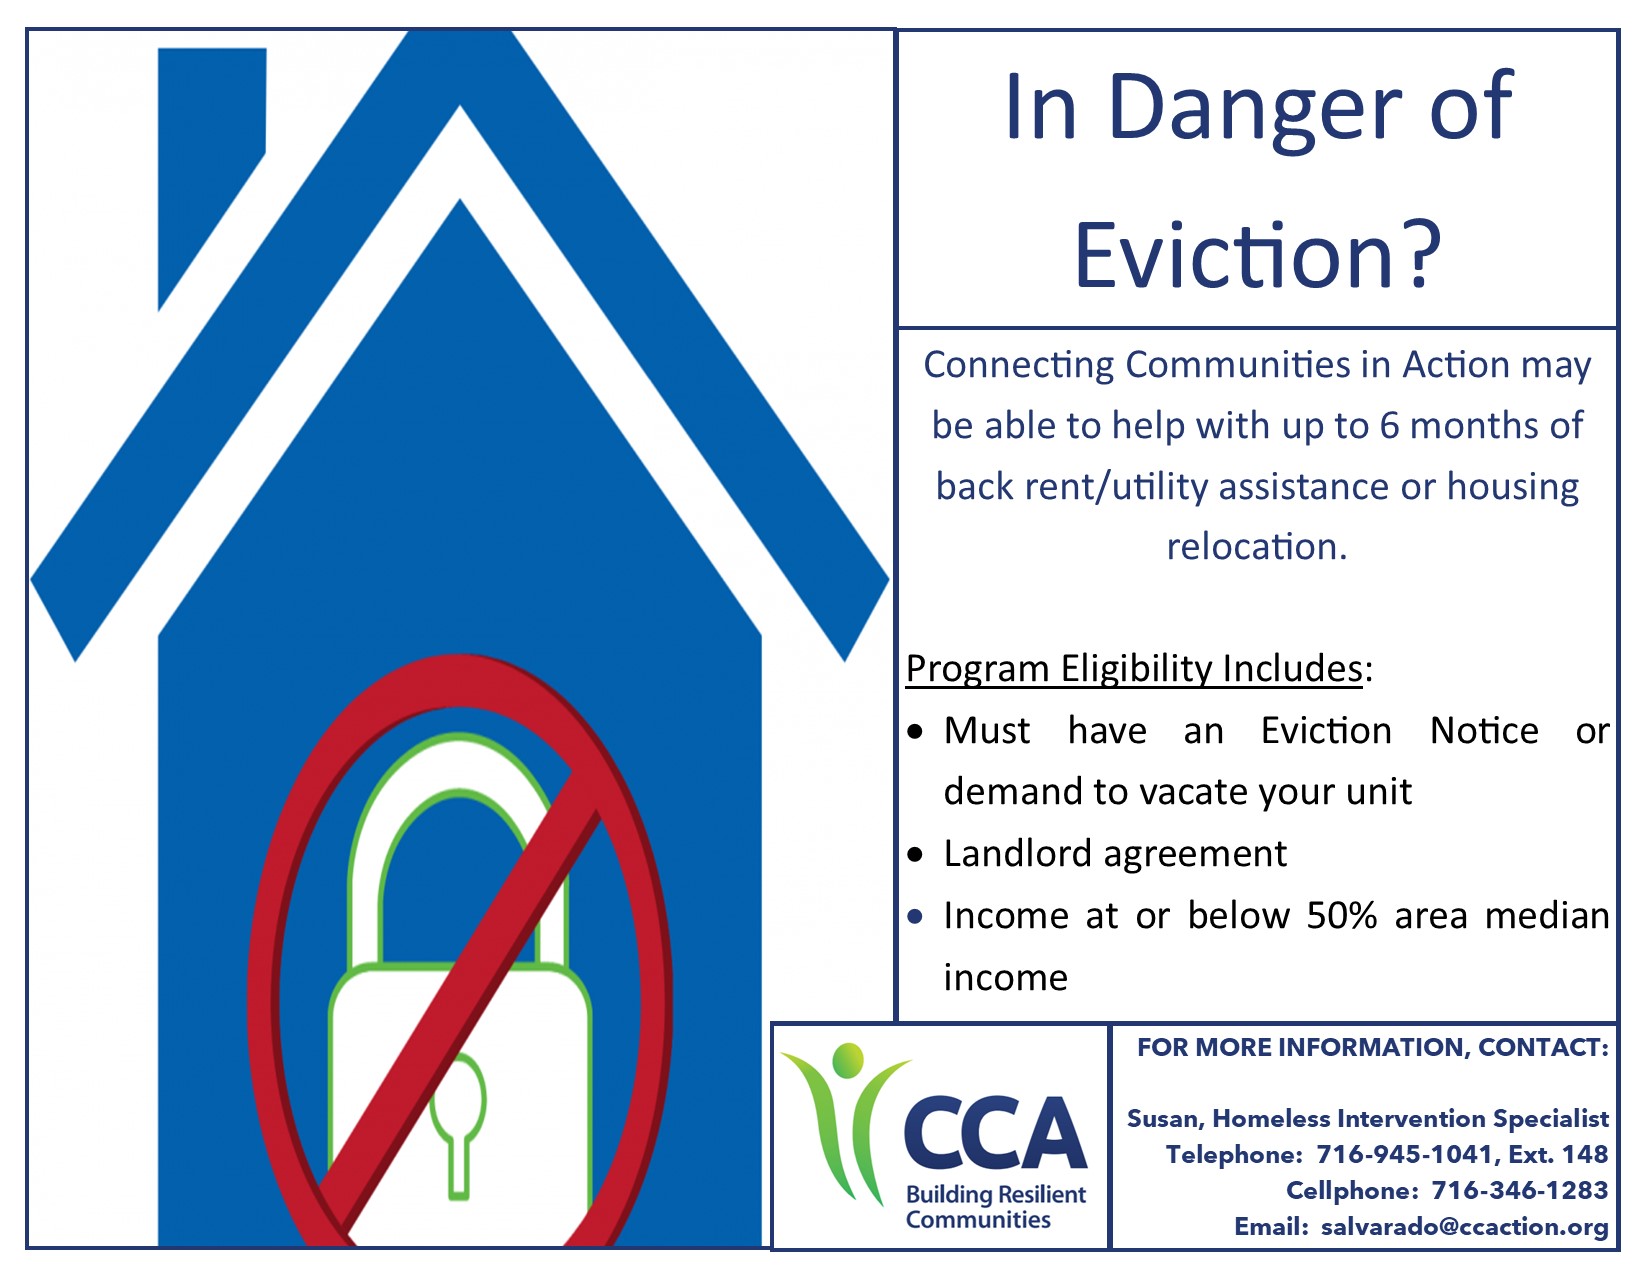 In Danger of Eviction flyer